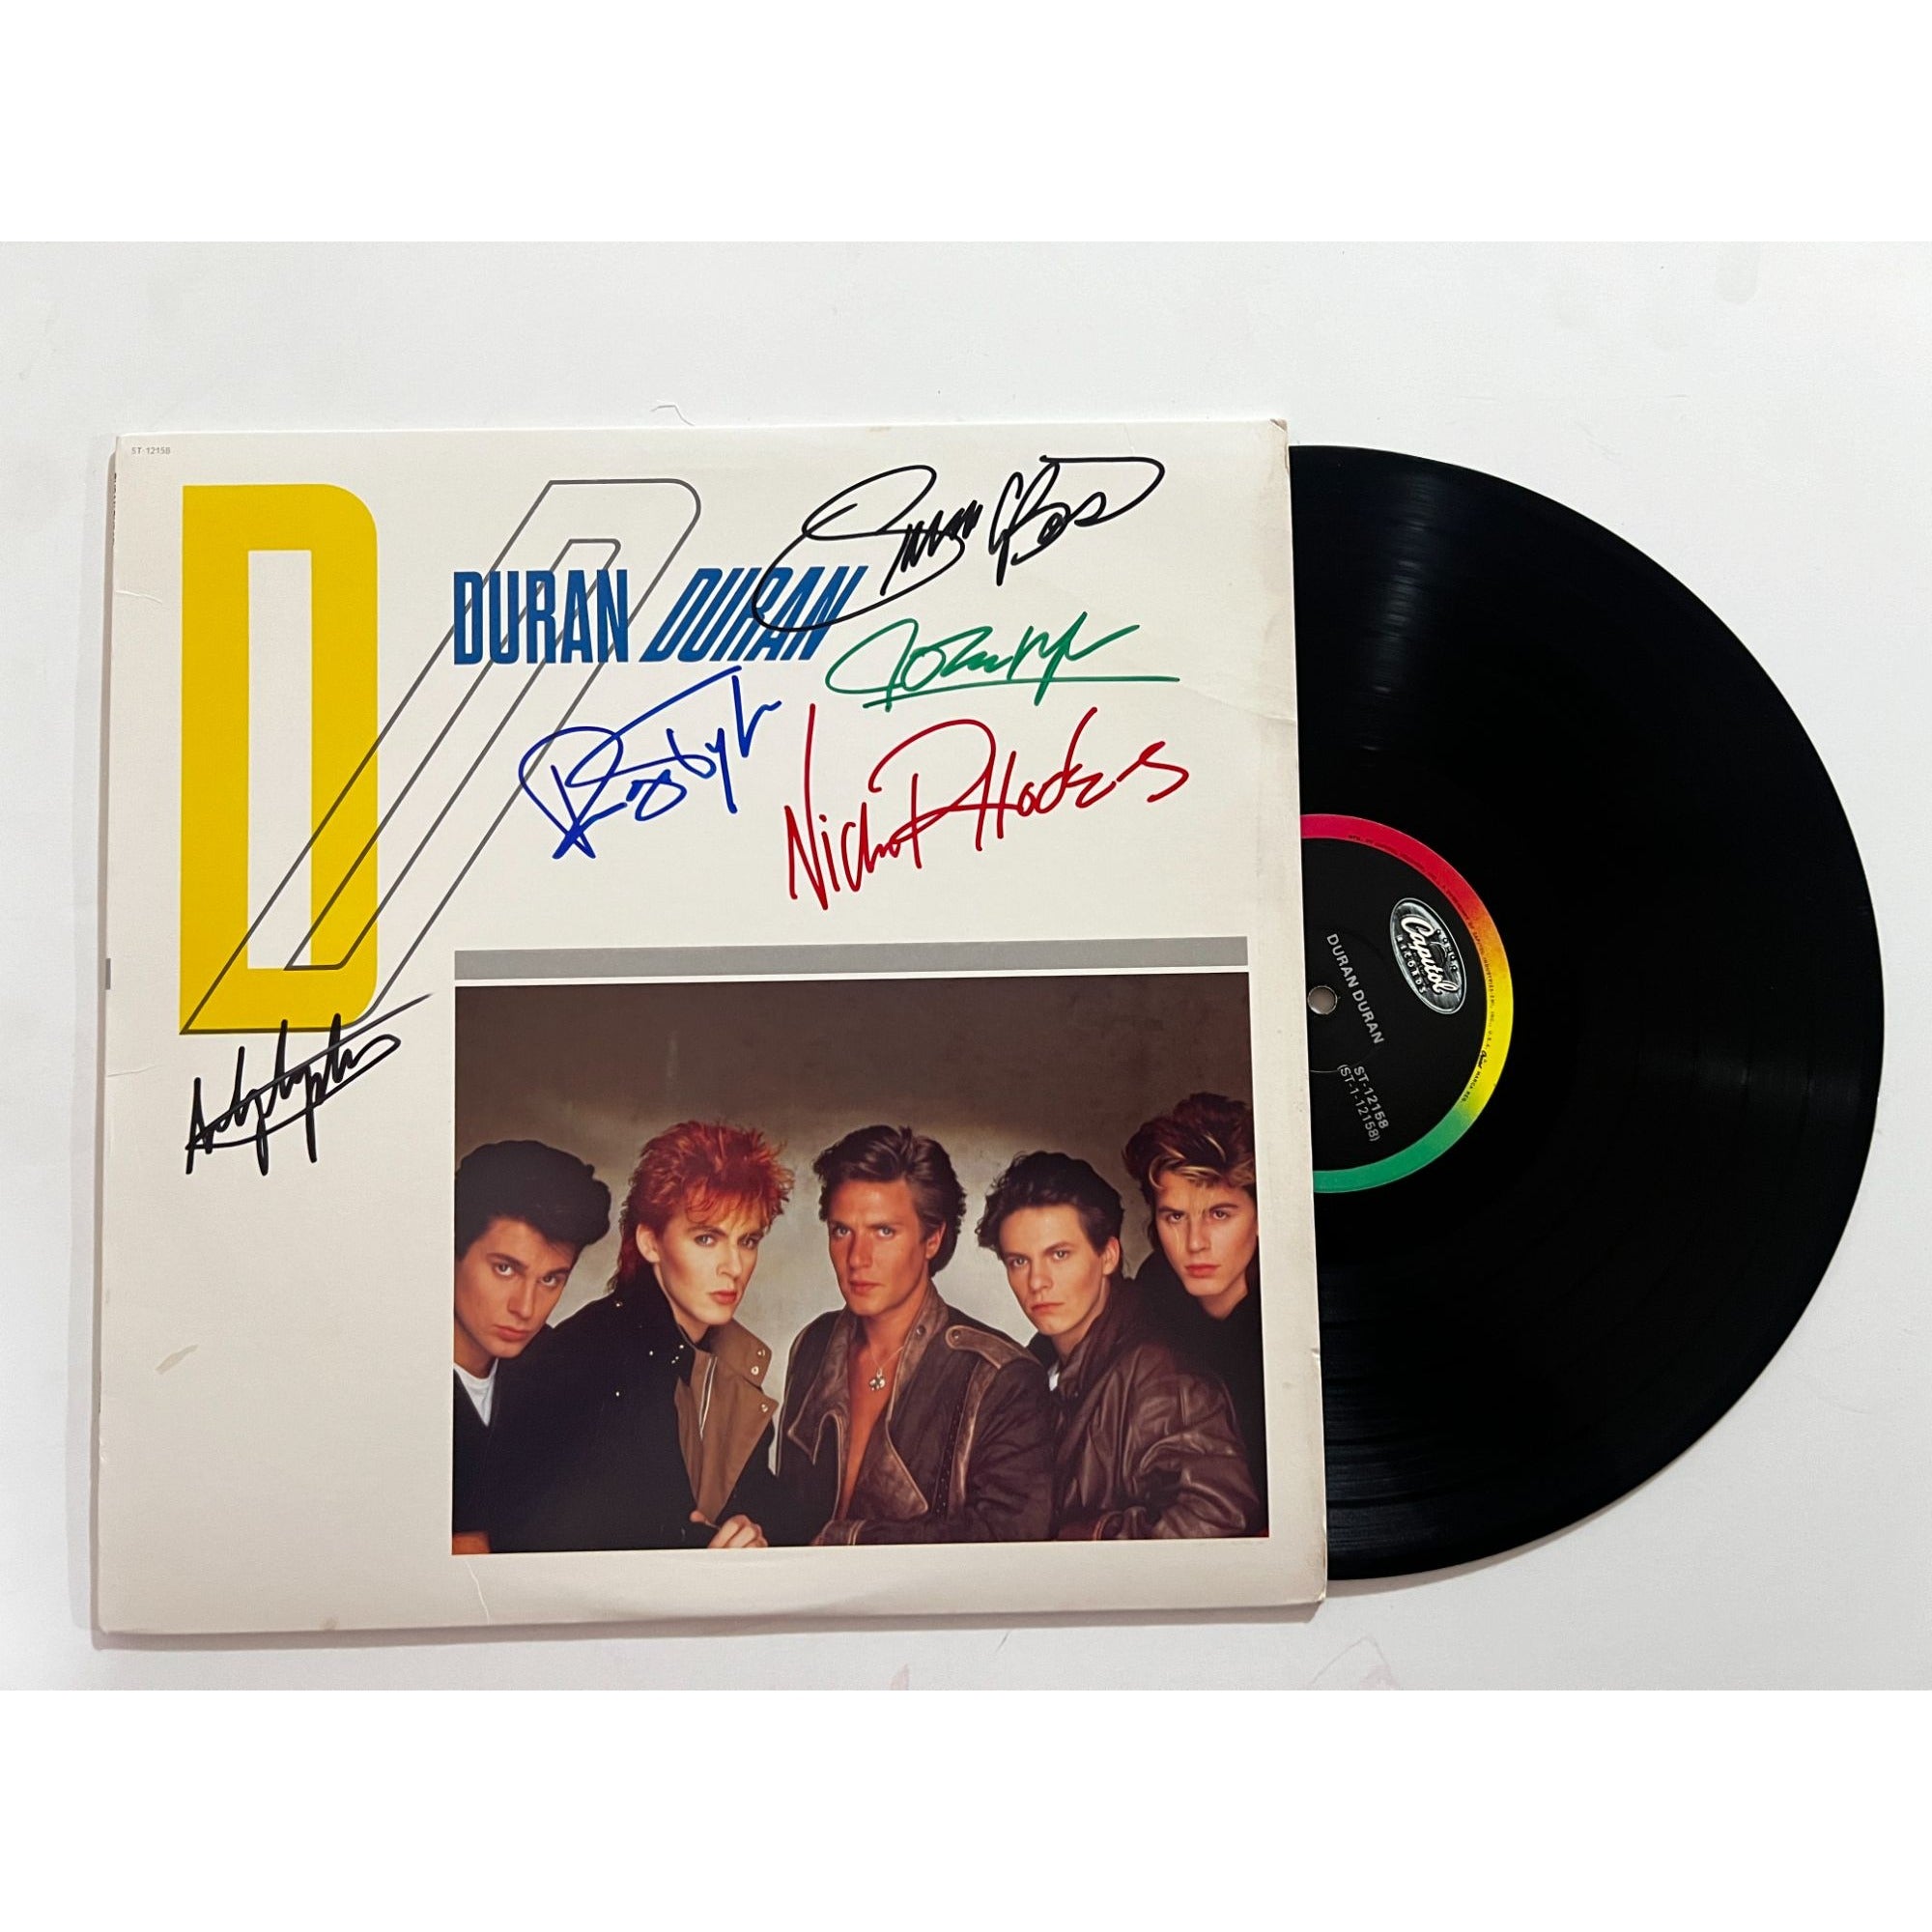 Duran Duran Simon Le Bon John Taylor Nick Rhodes Andy and Roger Taylor original LP signed with proof